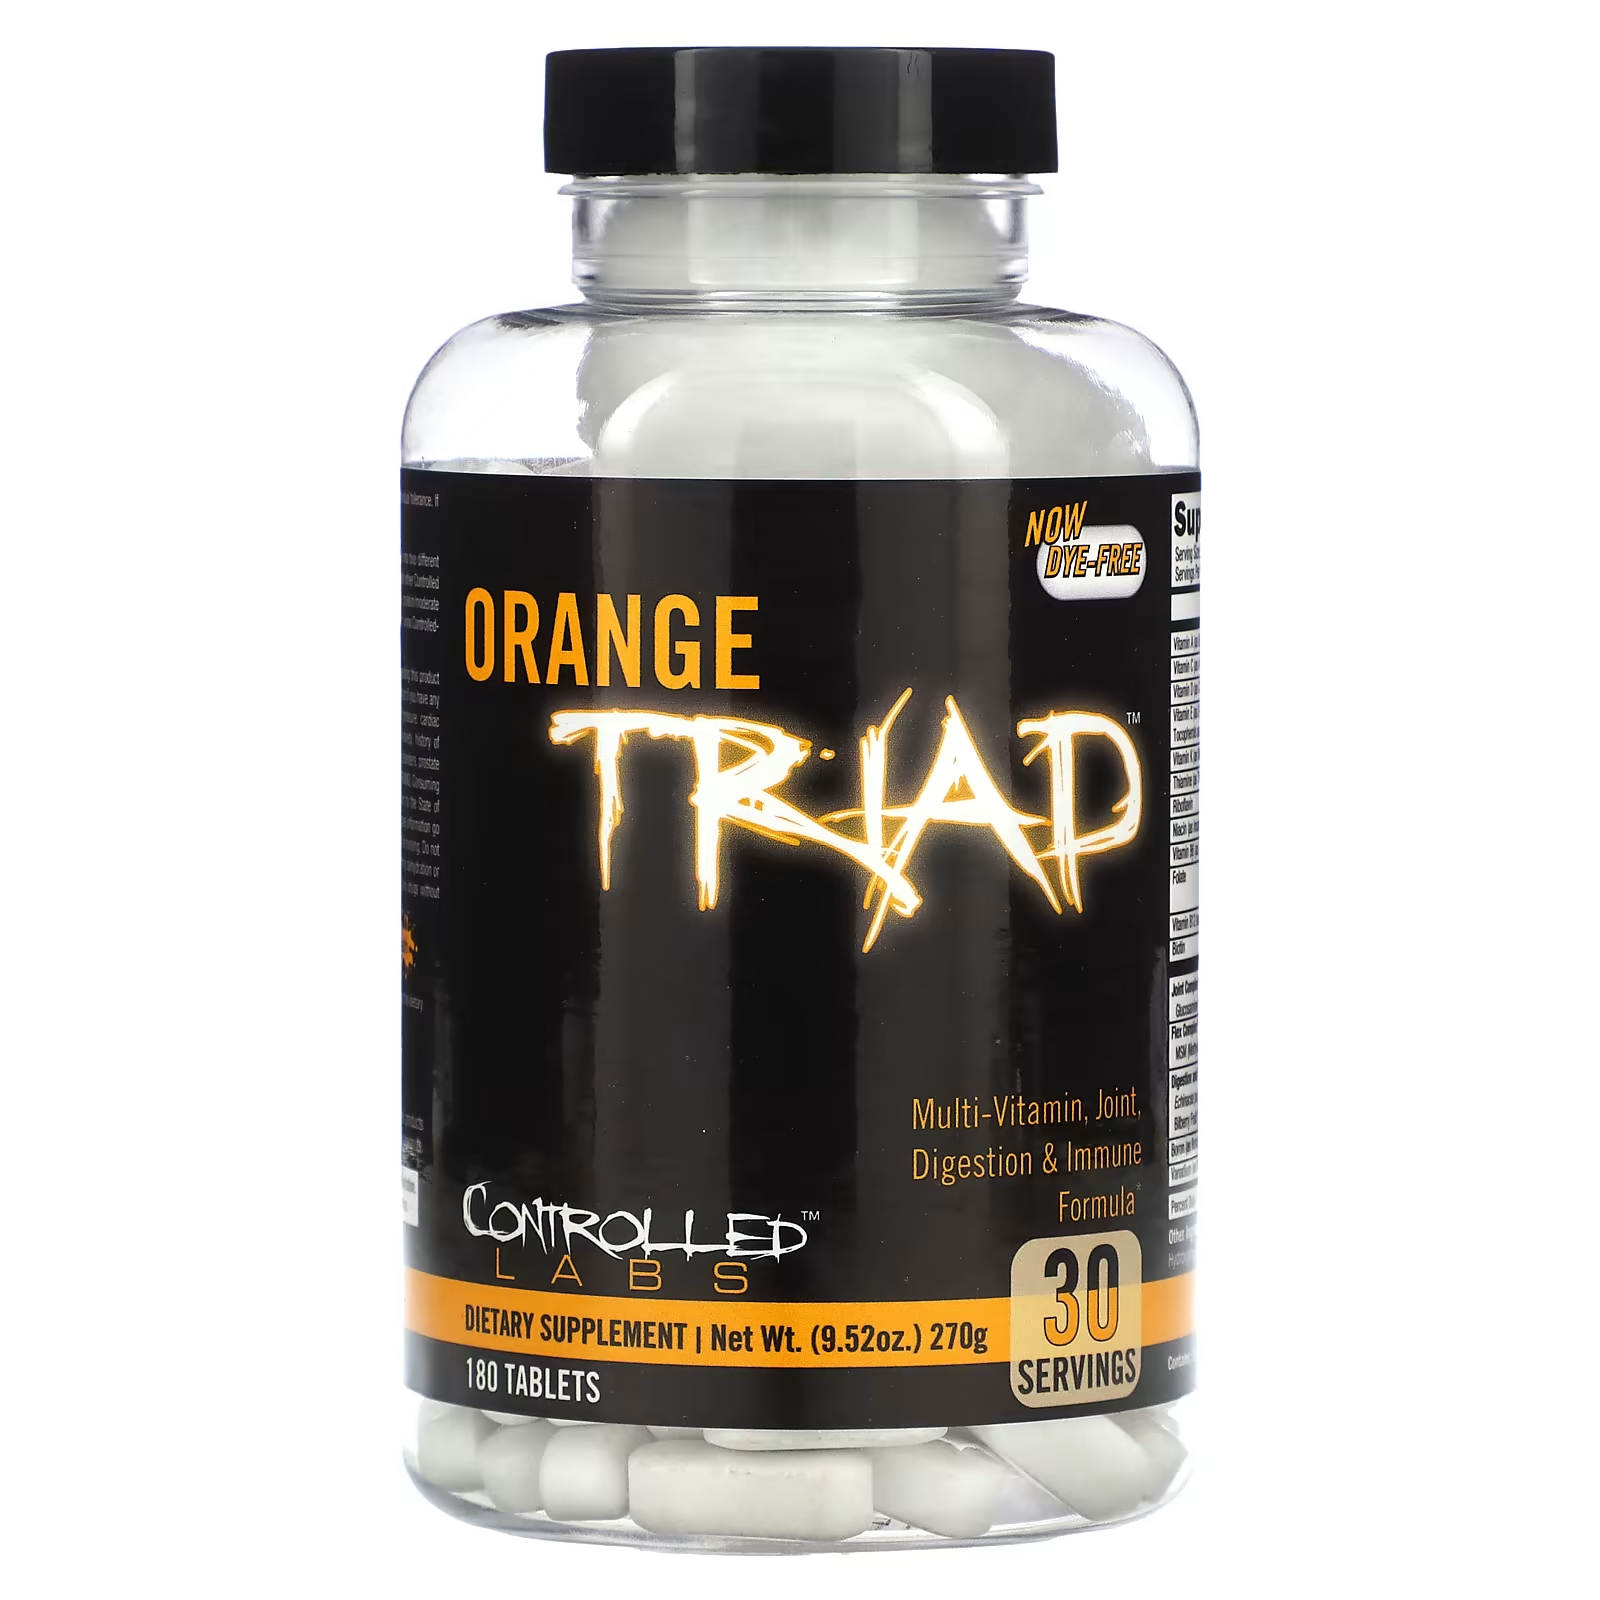 Мультивитаминная формула для пищеварения и иммунитета для суставов Controlled Labs Orange Triad, 180 таблеток фото